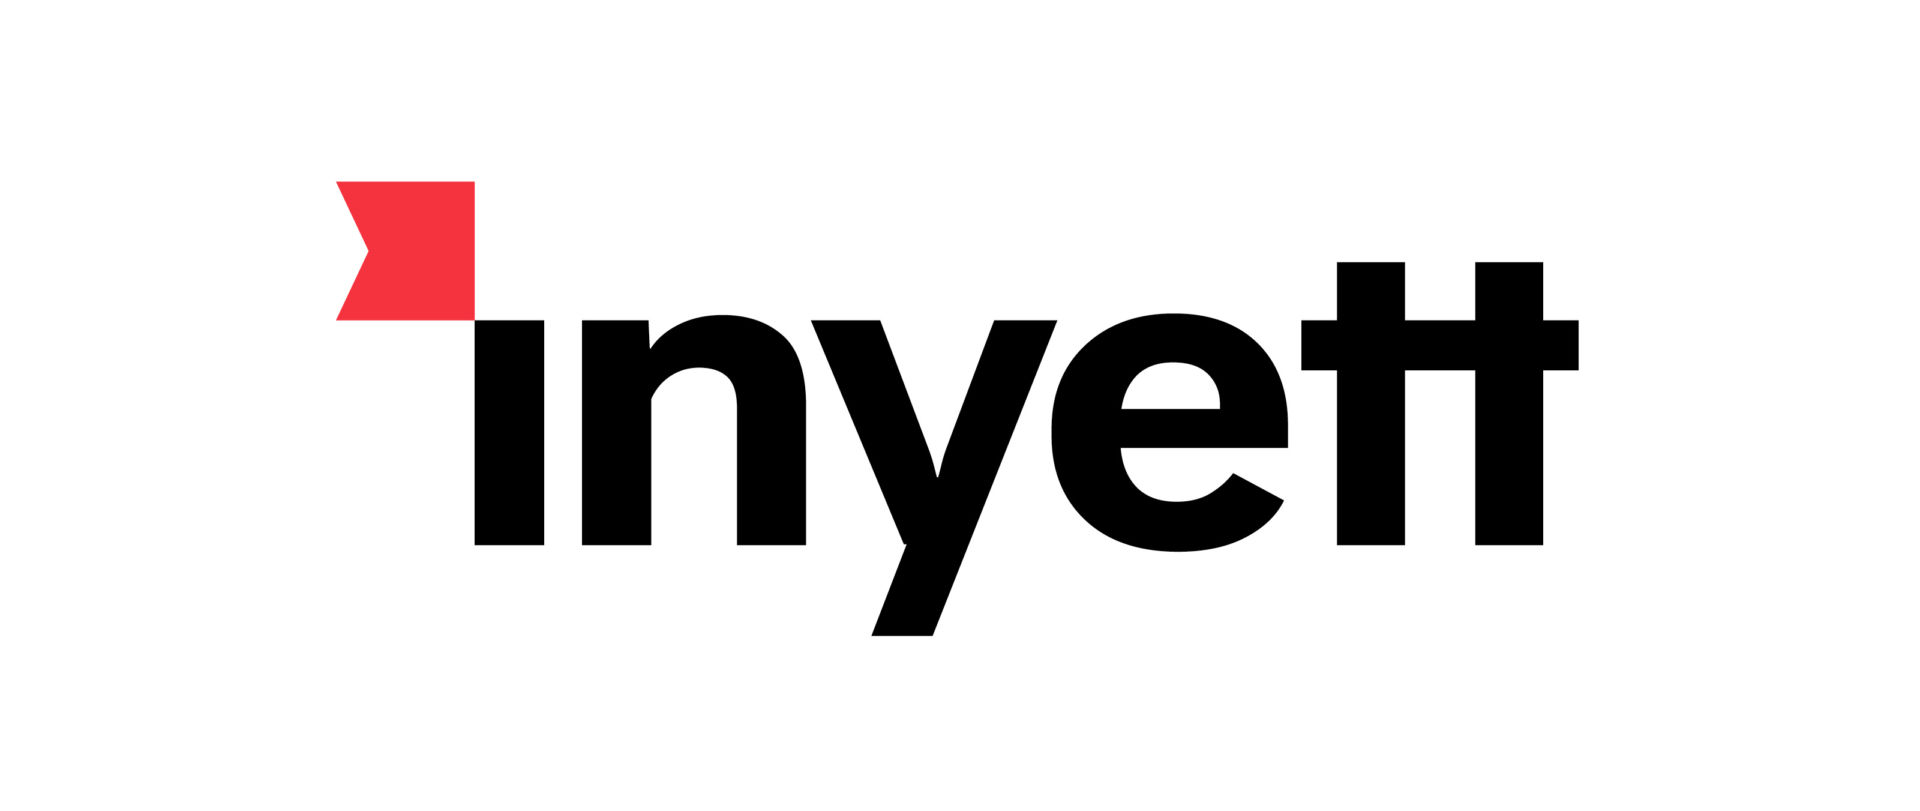 The new Inyett logo